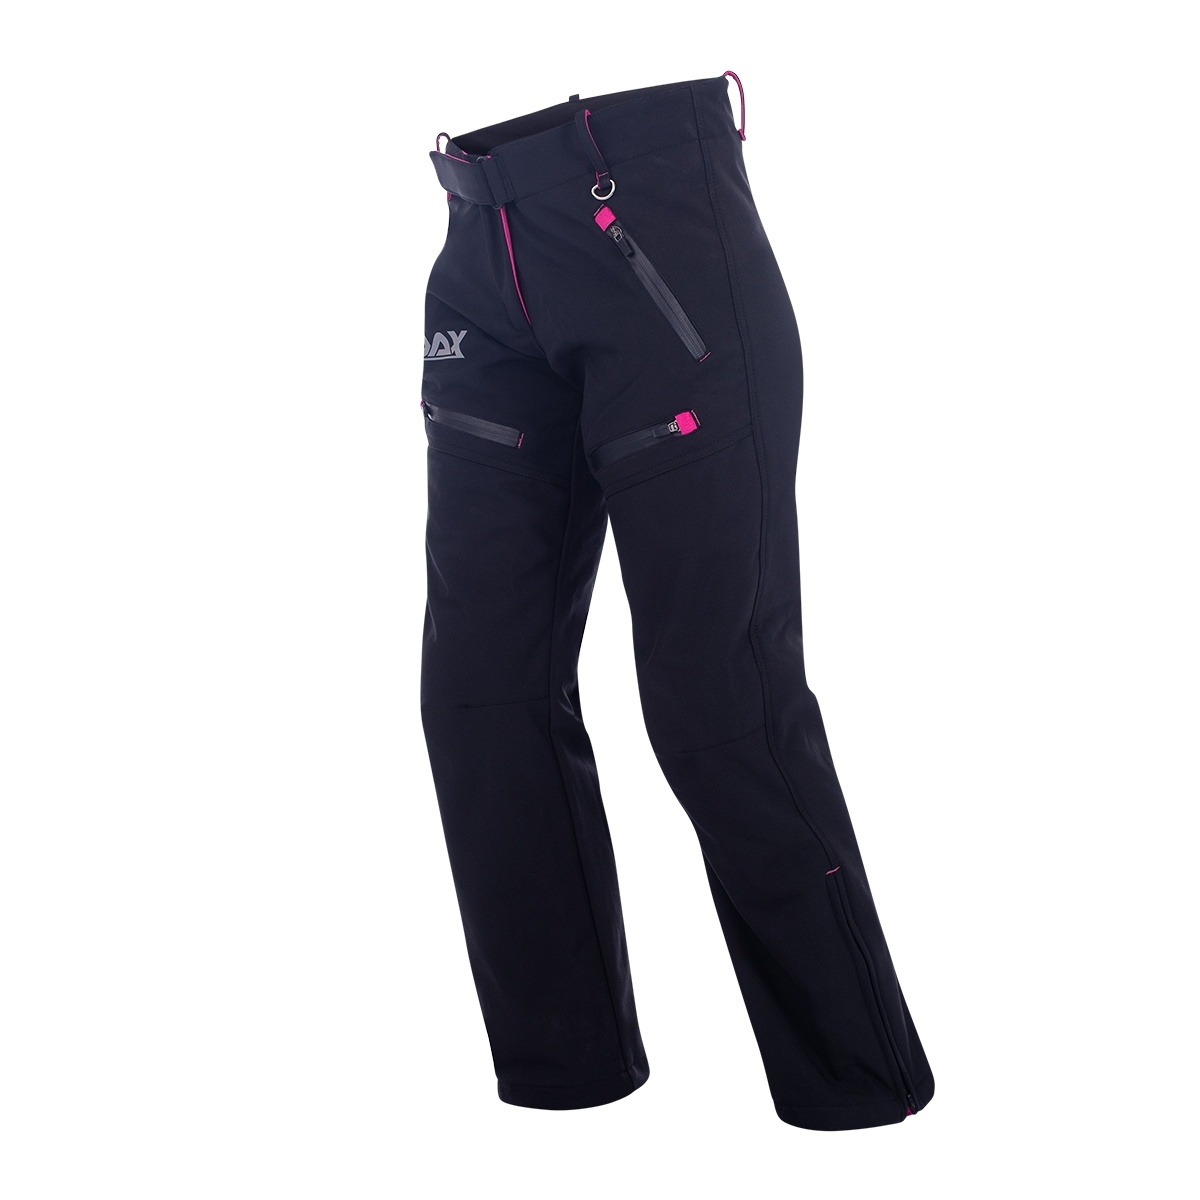 Obrázek produktu DAX LADY kalhoty S, SoftShell, s chrániči 2870-PNT-BP-S